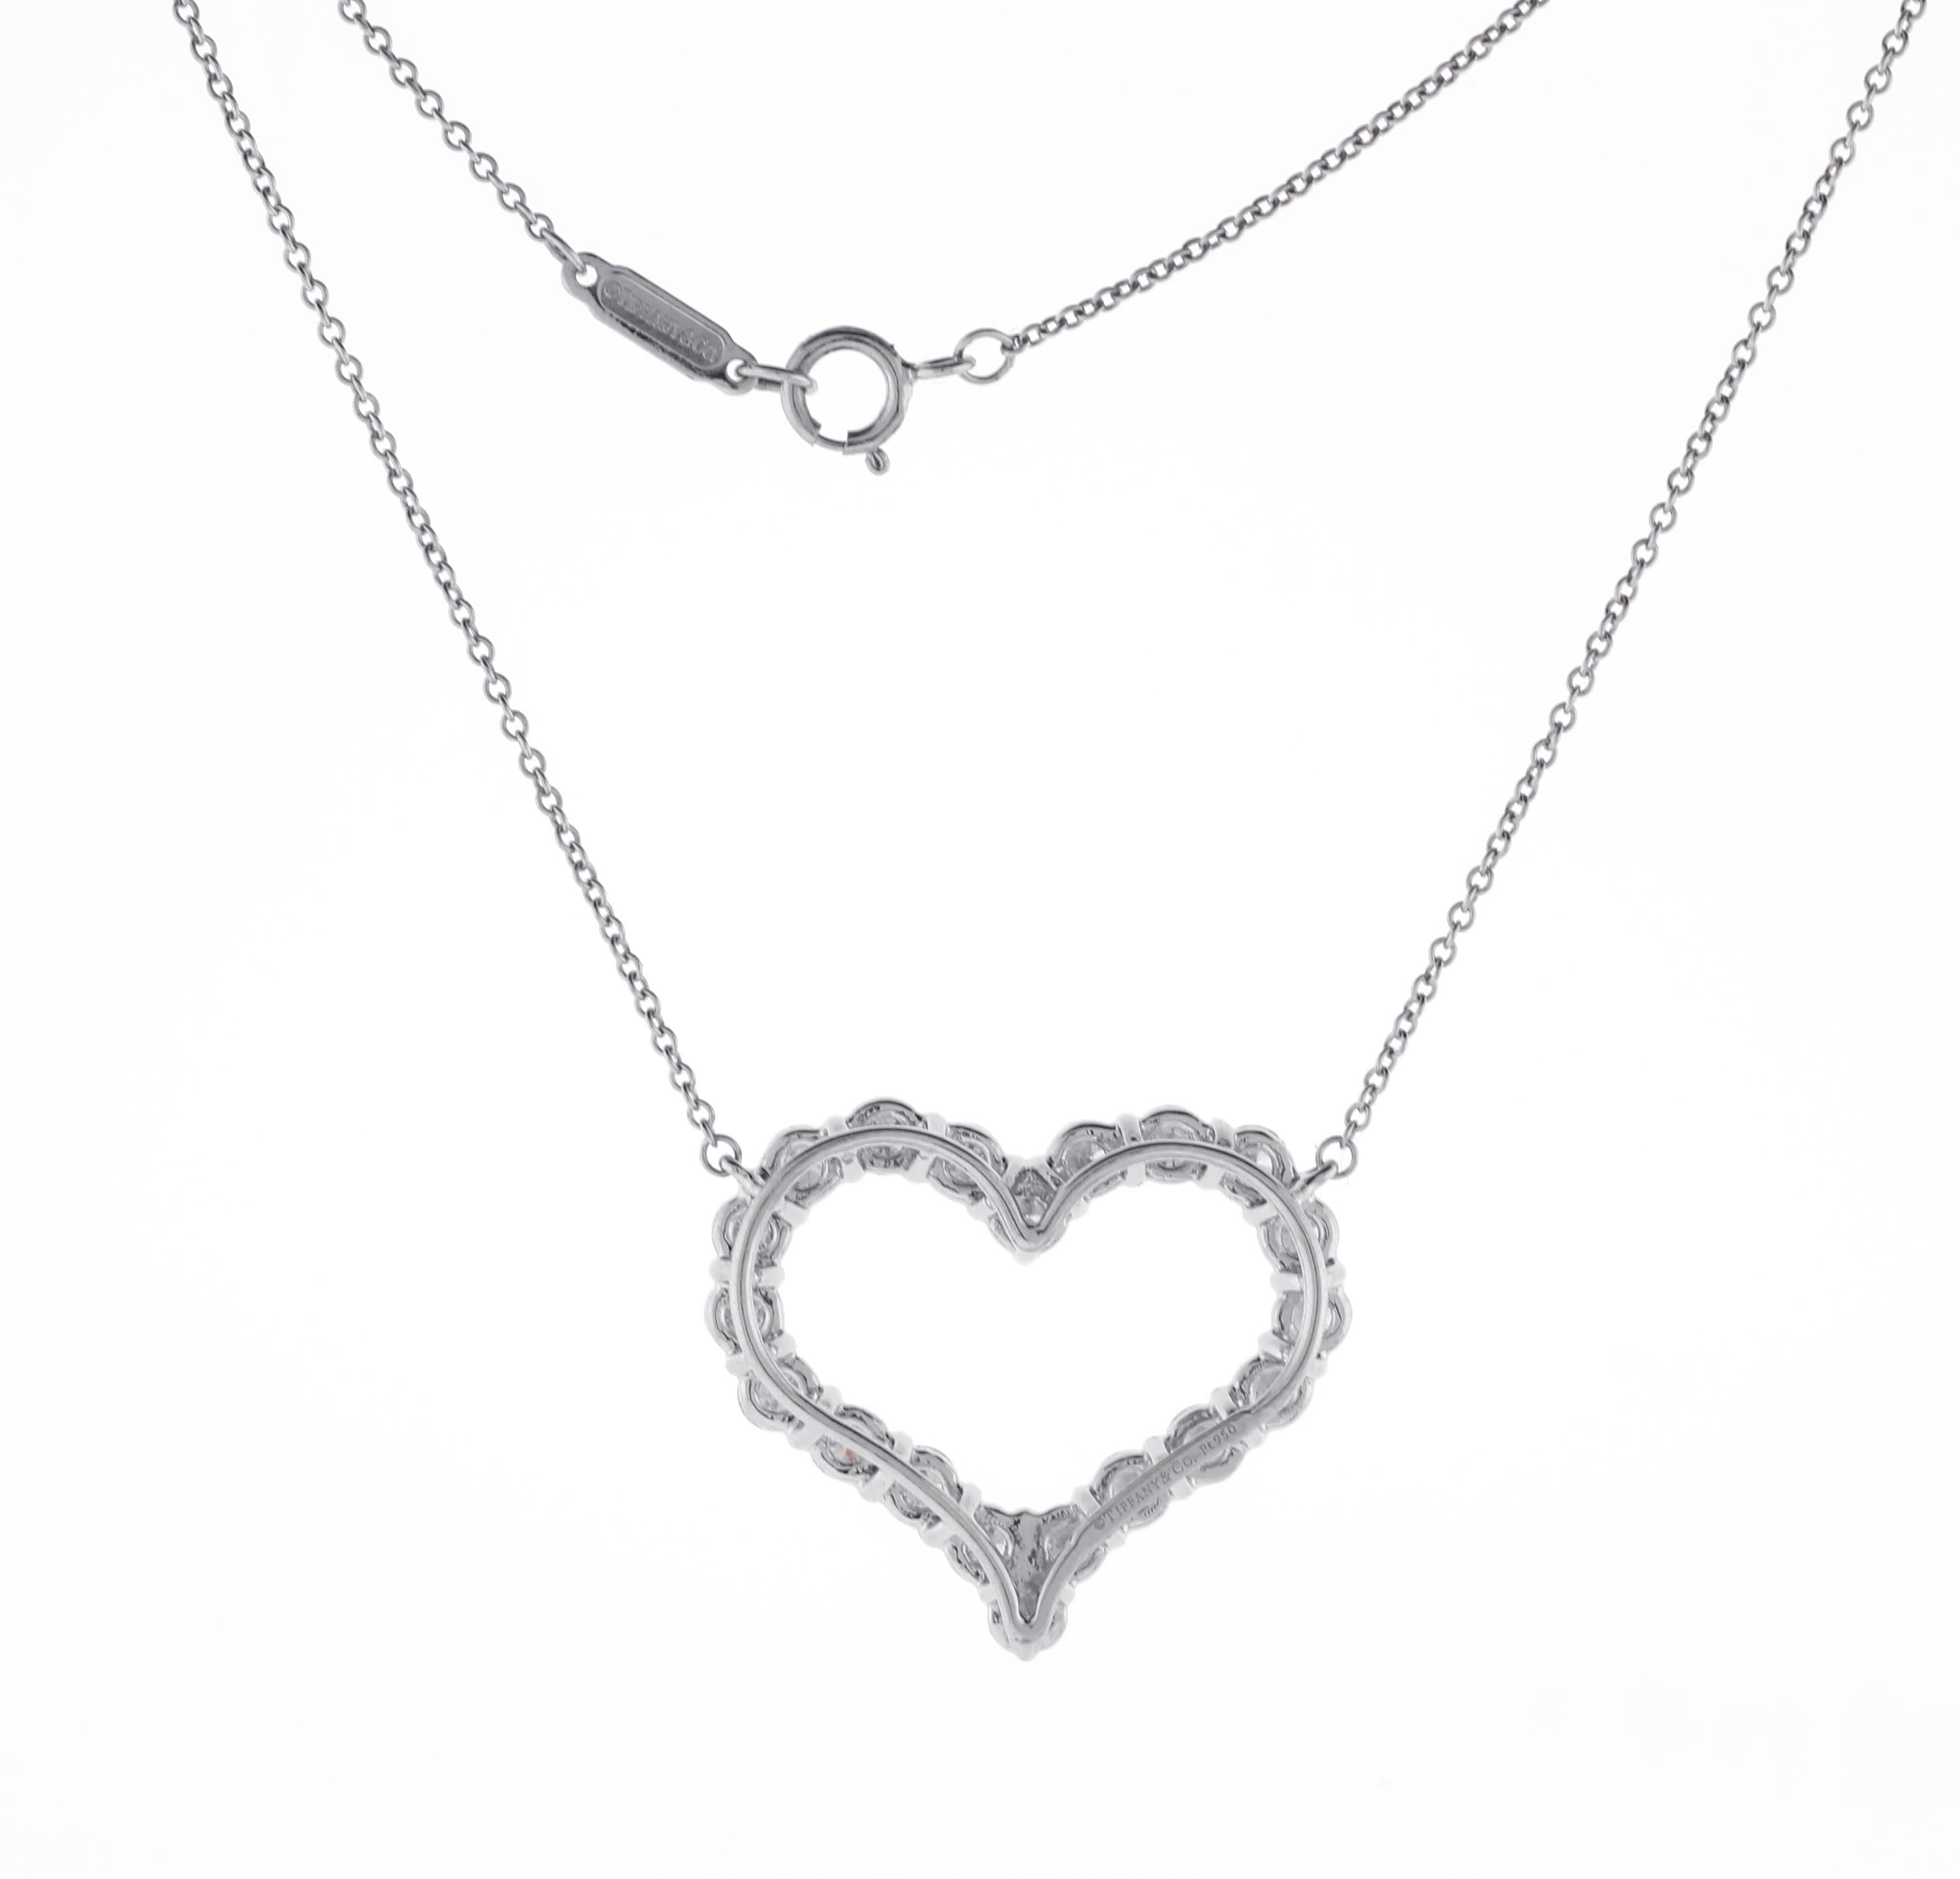 cos heart necklace